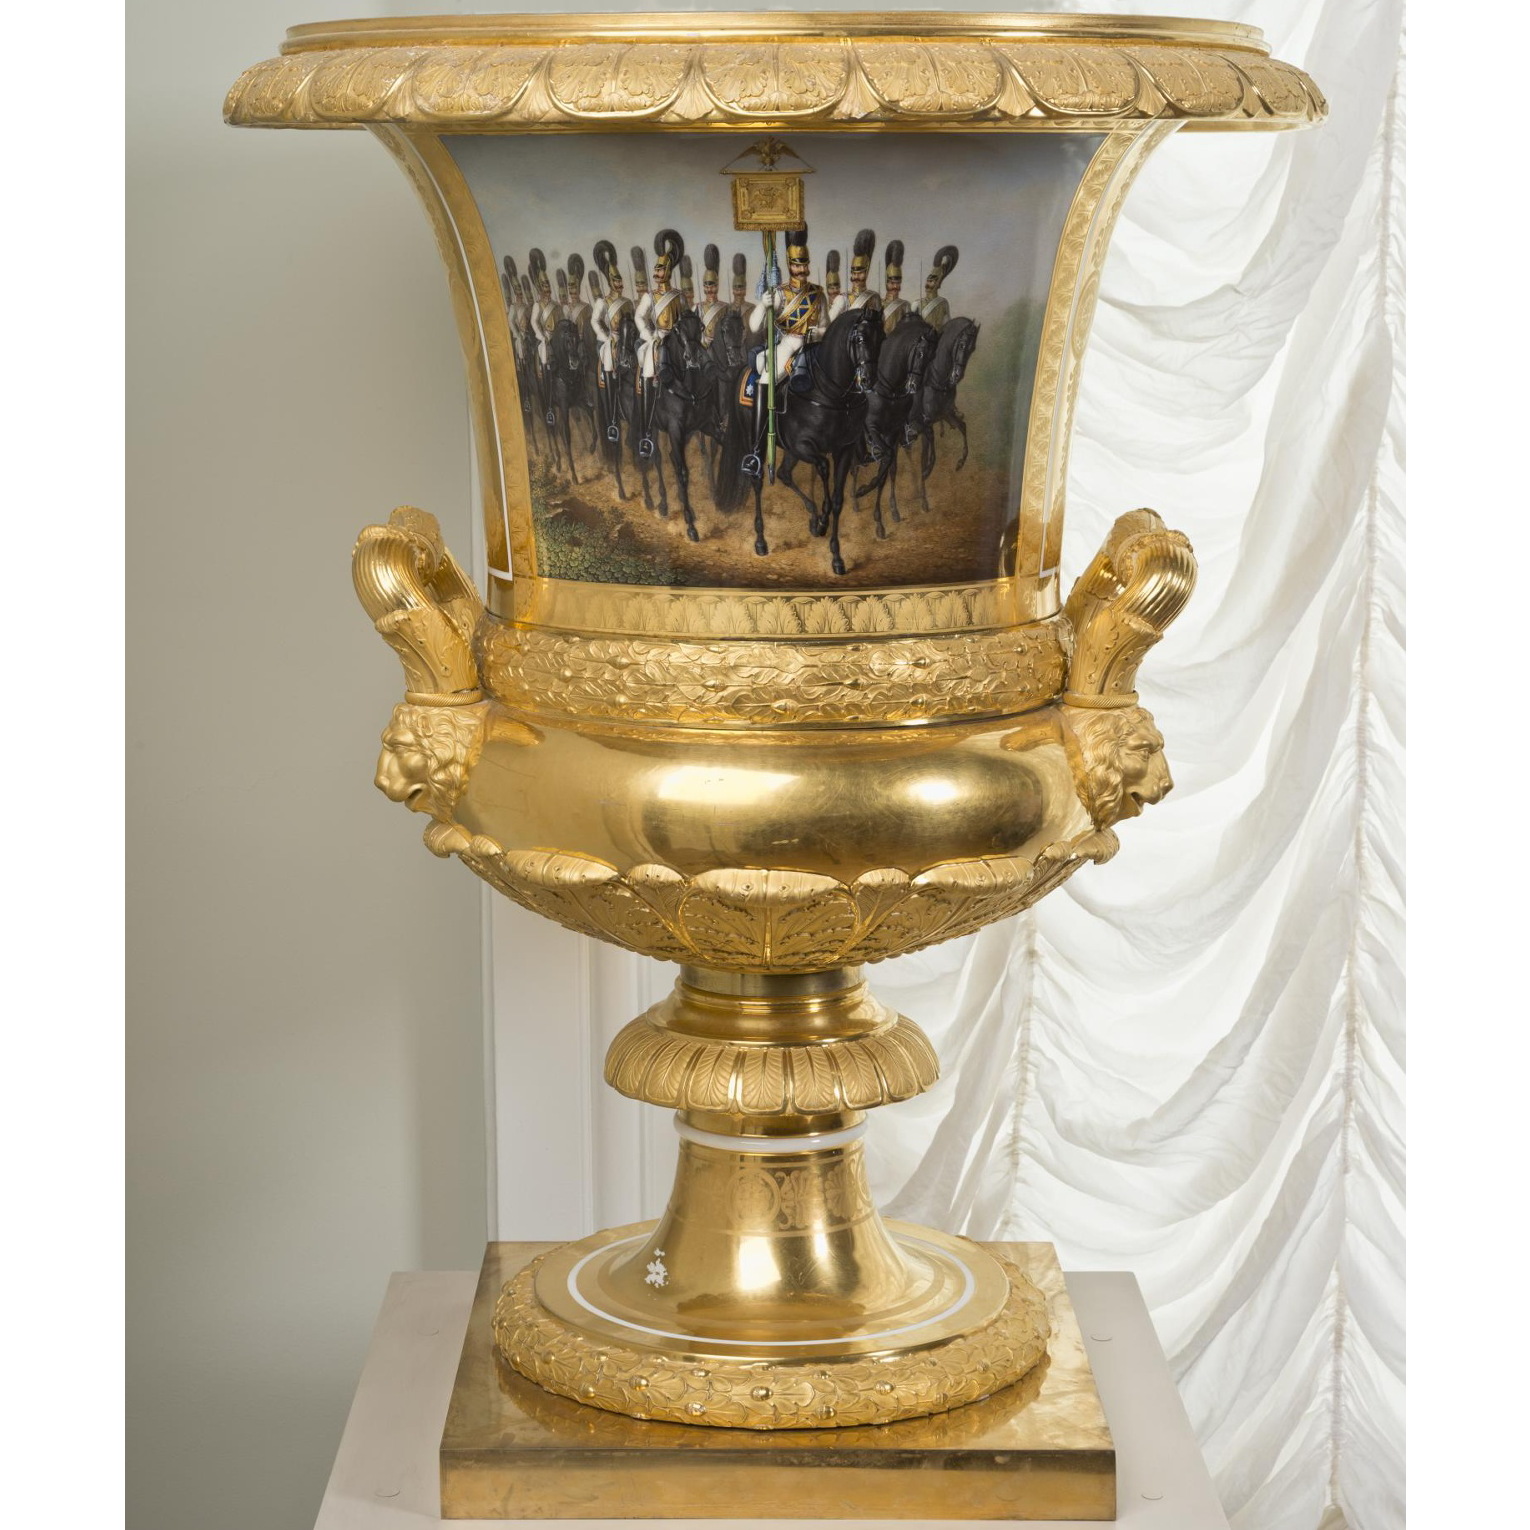 Russian Imperial Porcelain military vase - Life-Guard Horse Regiment